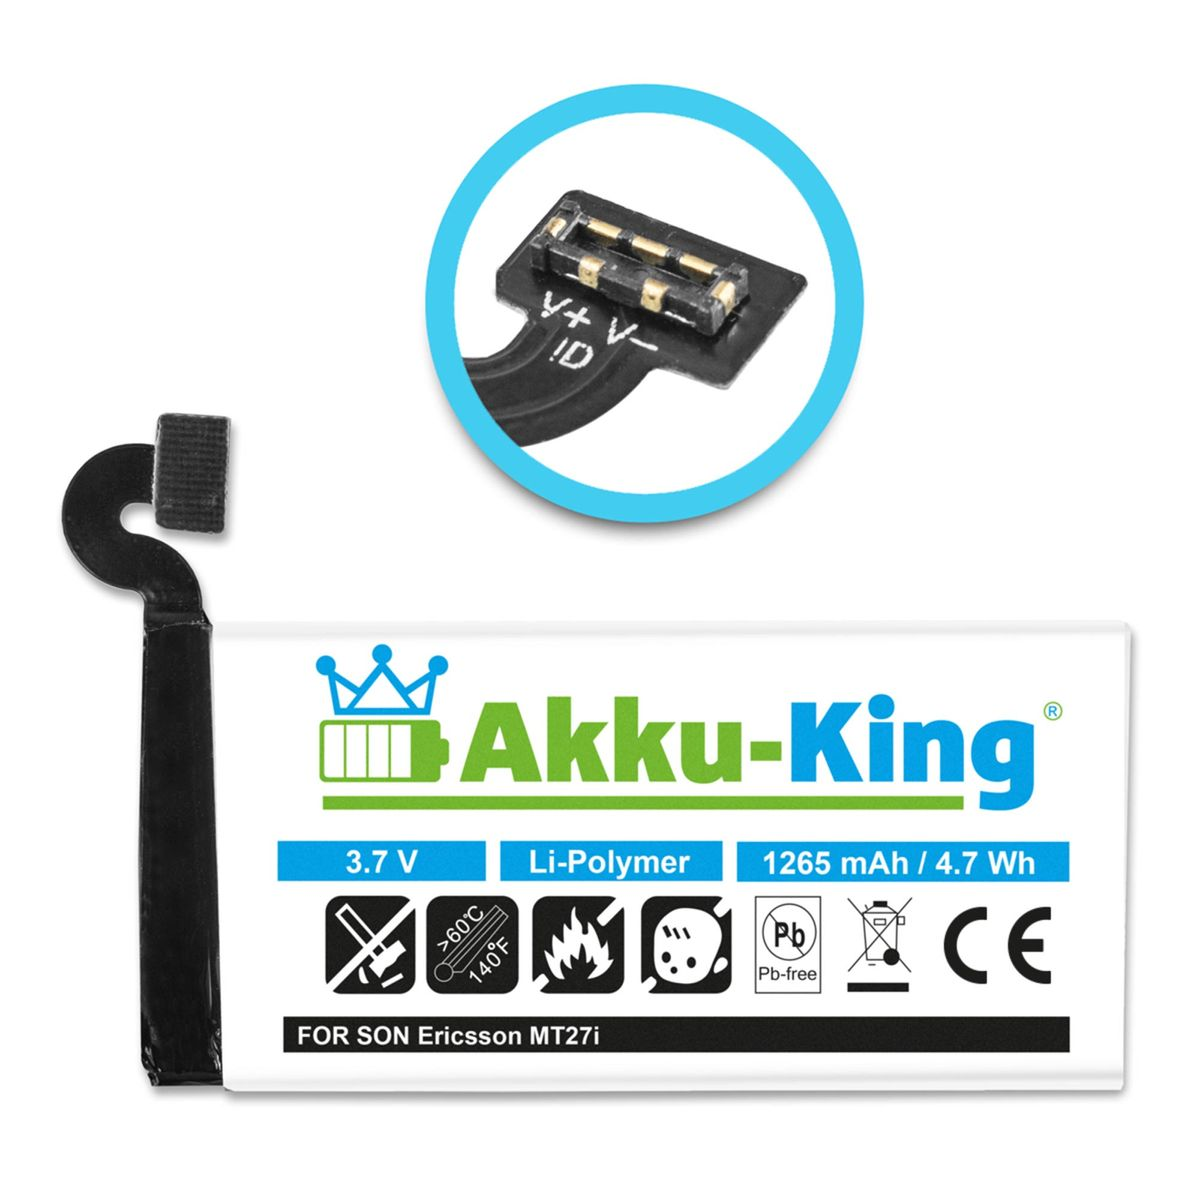 Volt, Sony 1265mAh AGPB009-A002 Li-Polymer Akku 3.7 kompatibel mit AKKU-KING Handy-Akku,